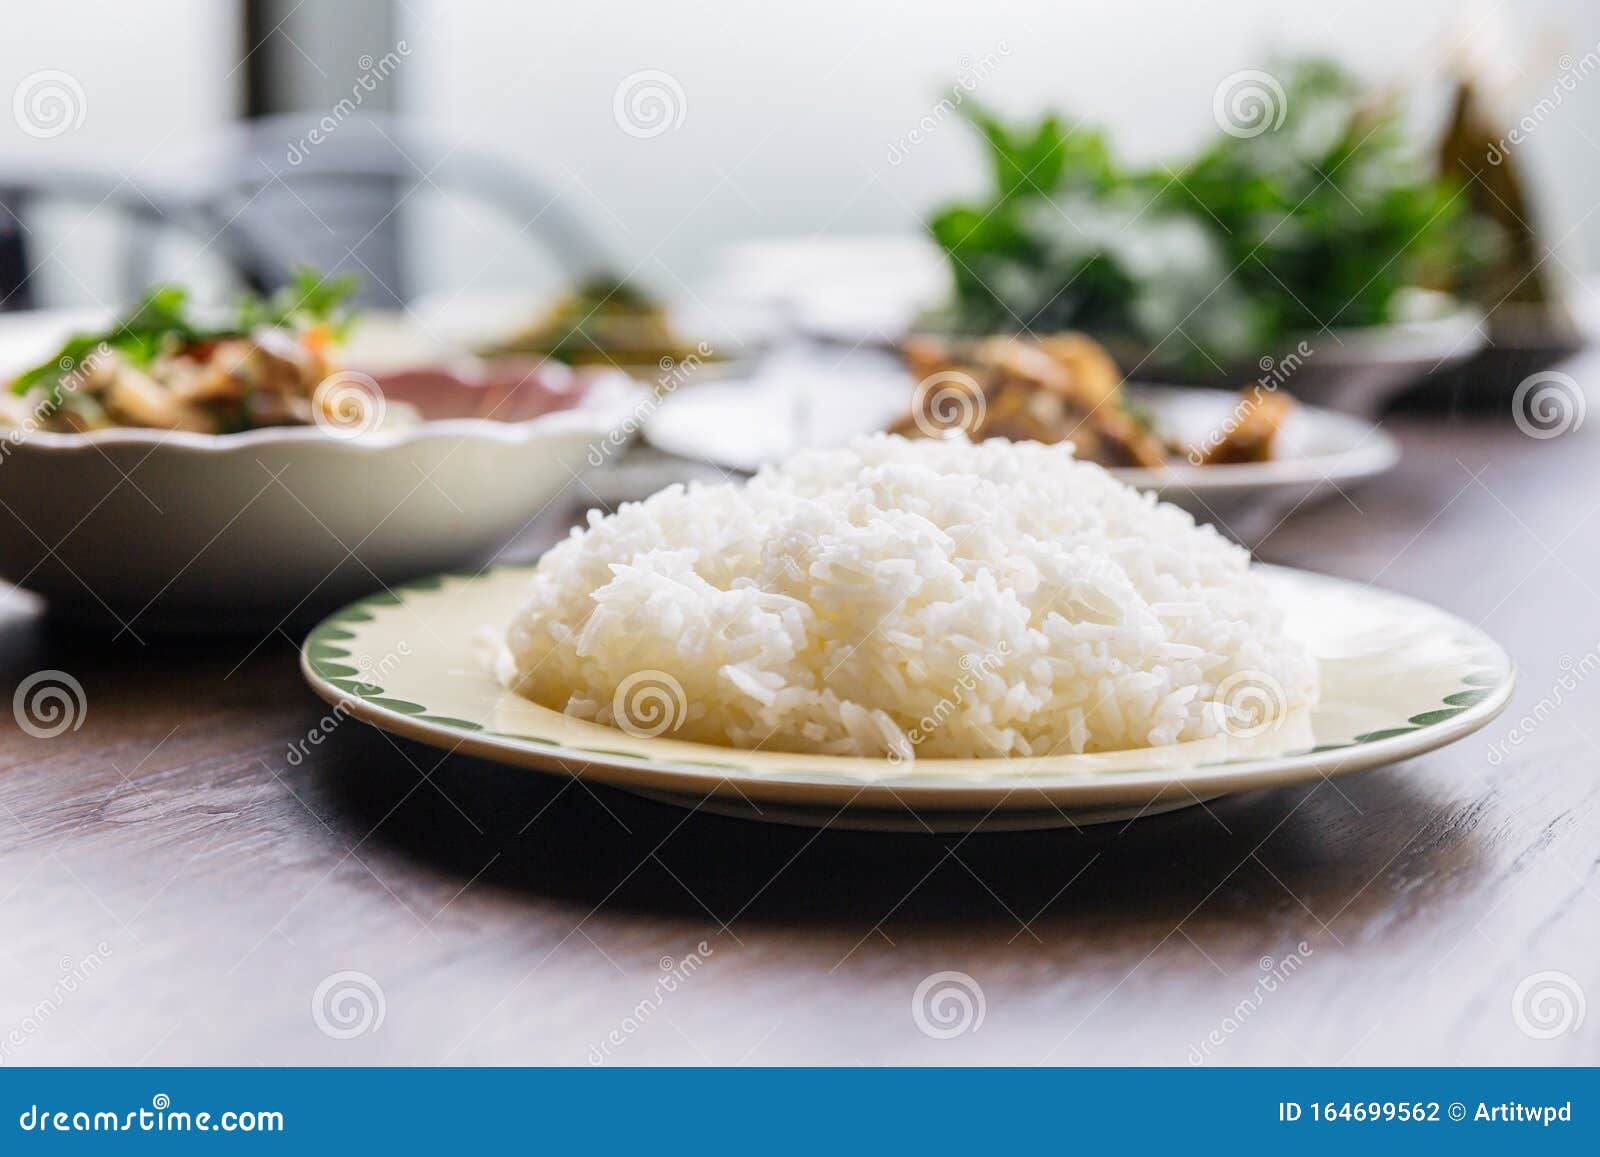 Rice steam potatoes фото 67